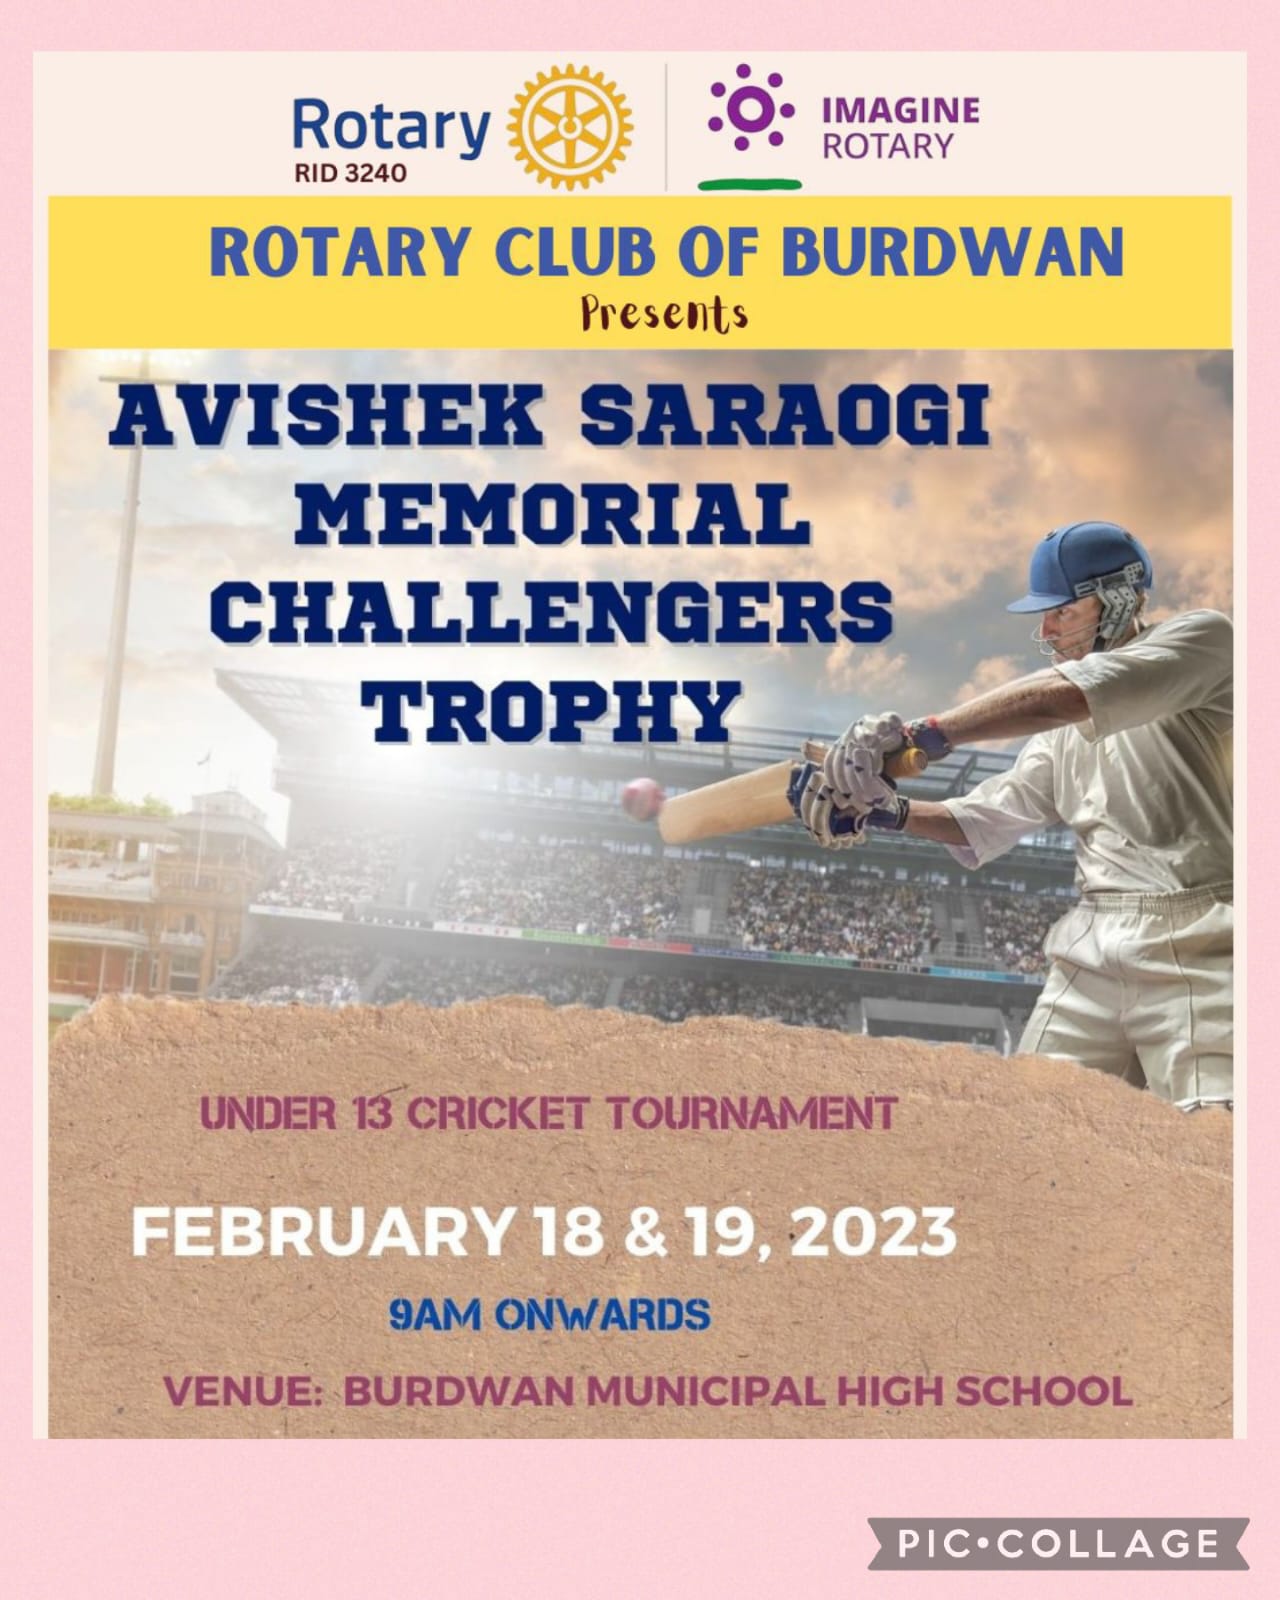 Avishek Saraogi Memorial Challengers Trophy- under 13 cricket tournament